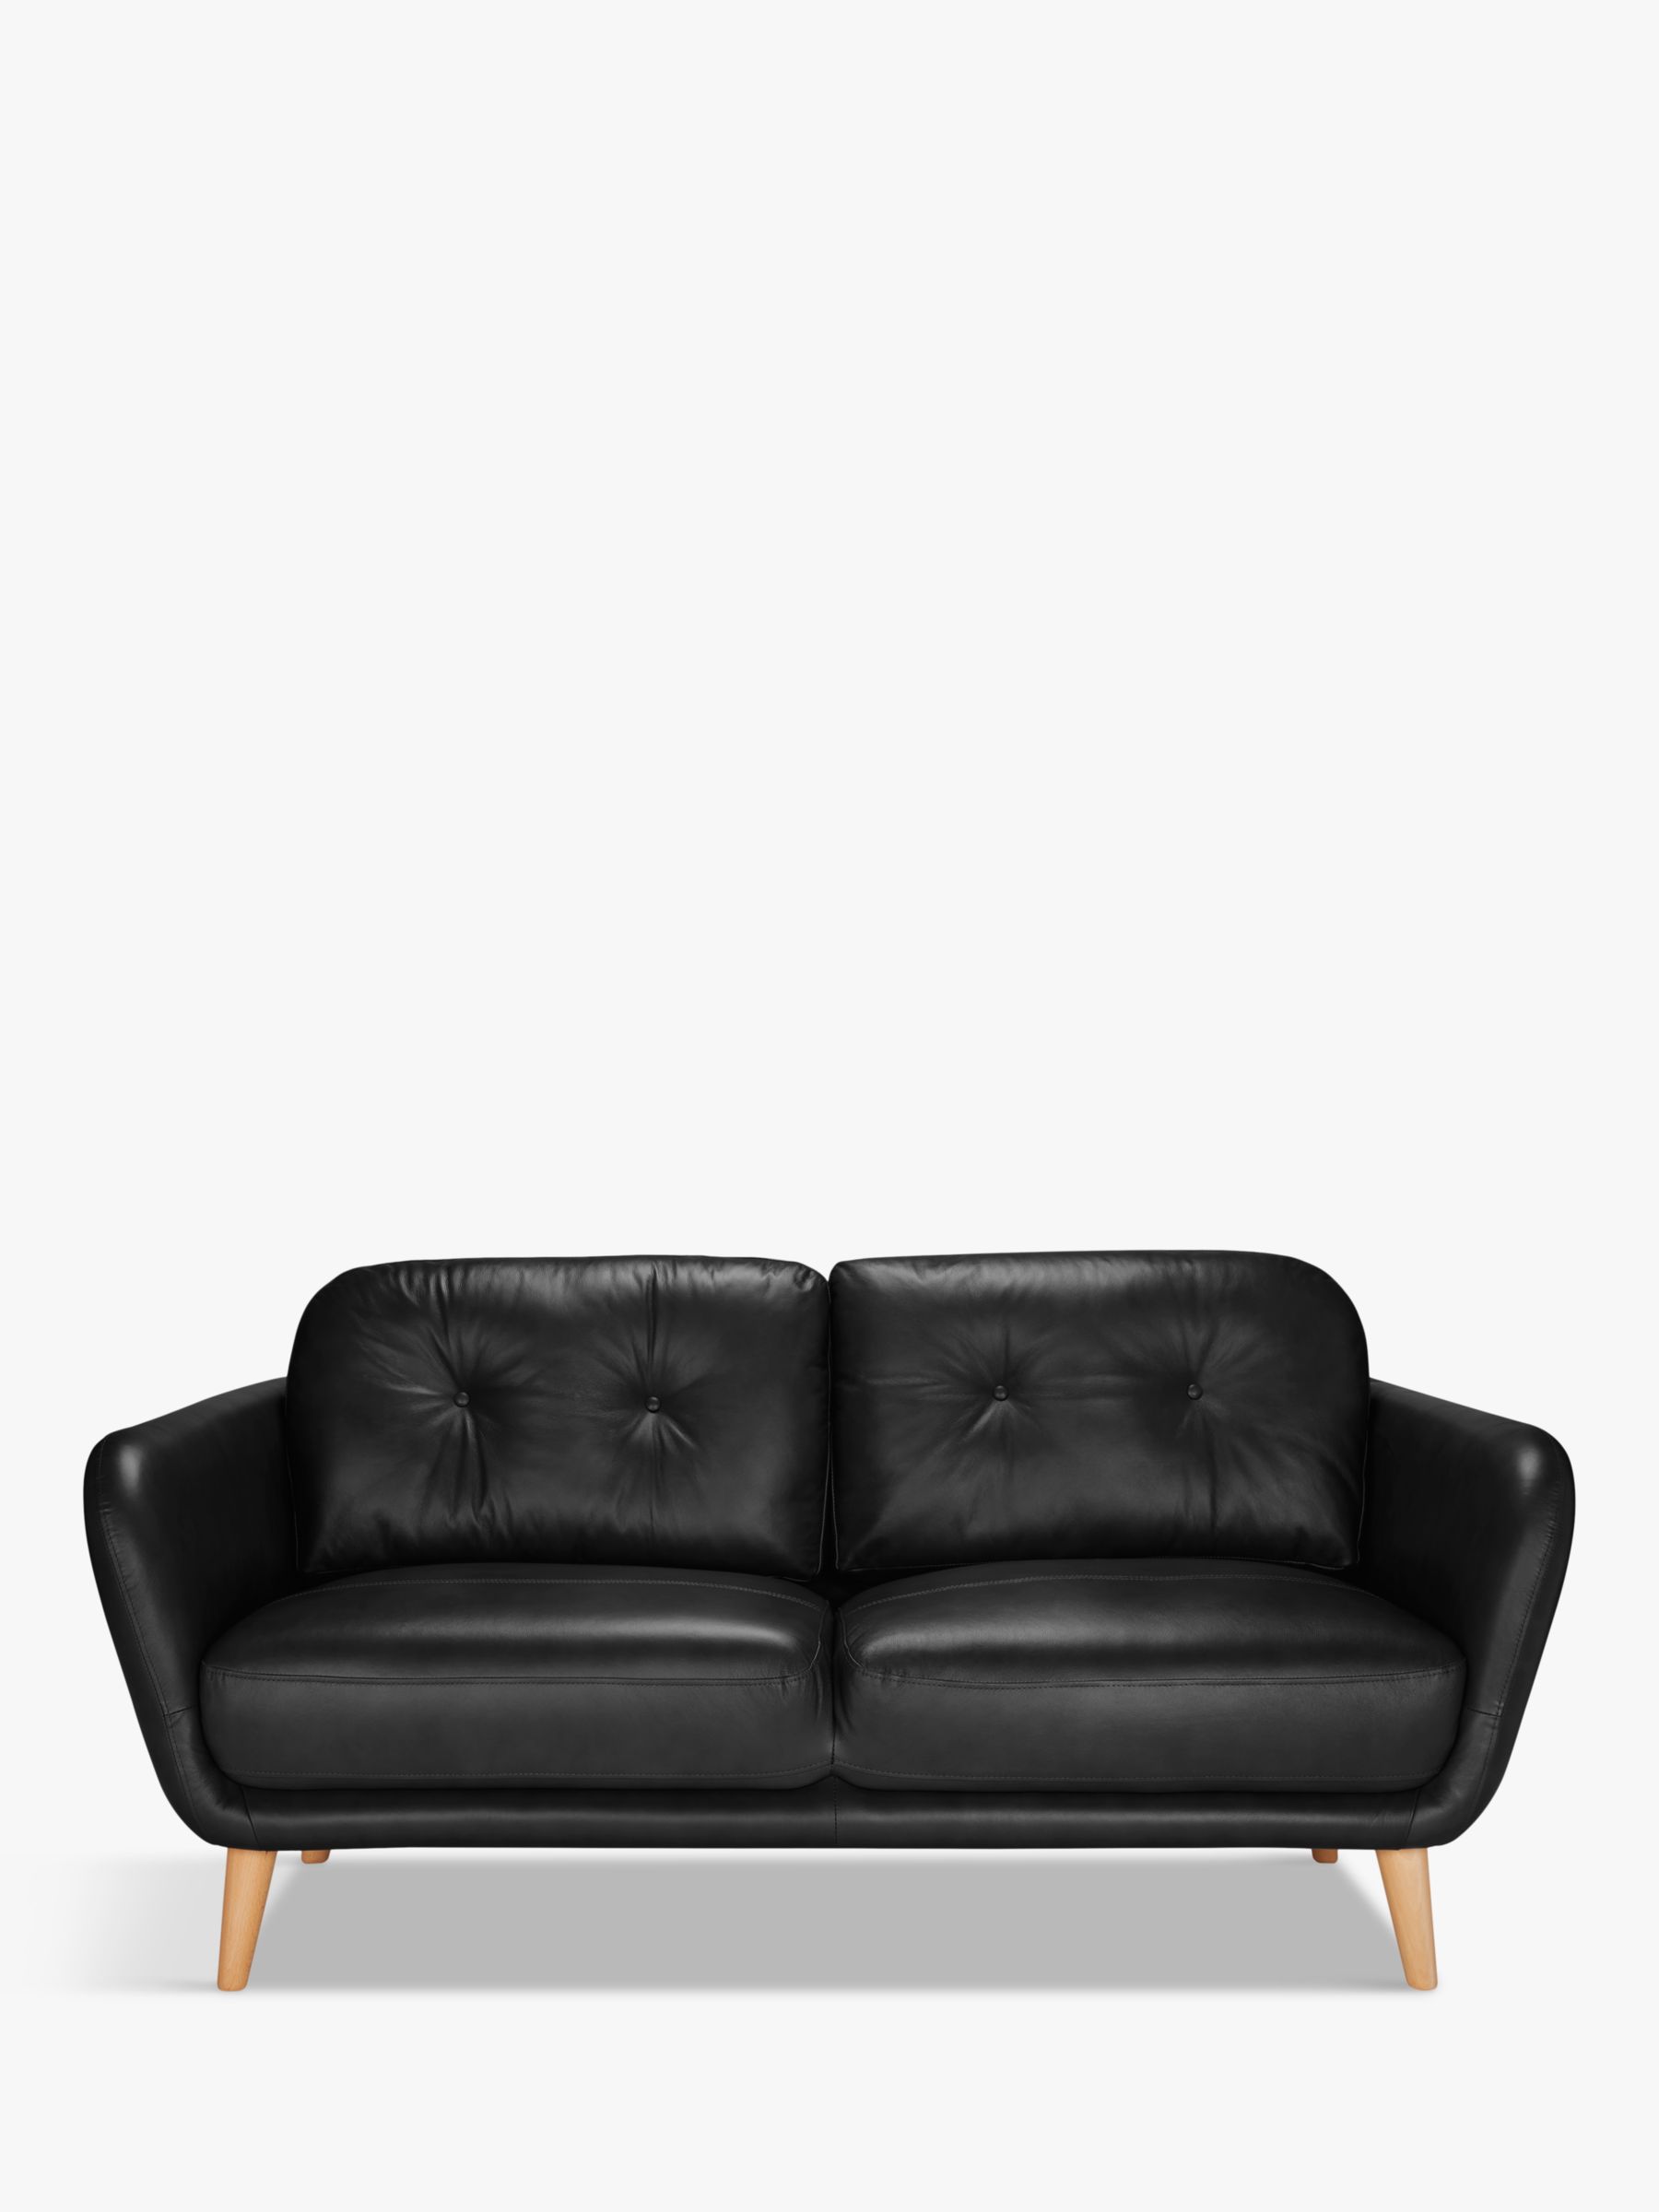 Arlo Range, John Lewis Arlo Leather Medium 2 Seater Sofa, Dark Leg, Contempo Black